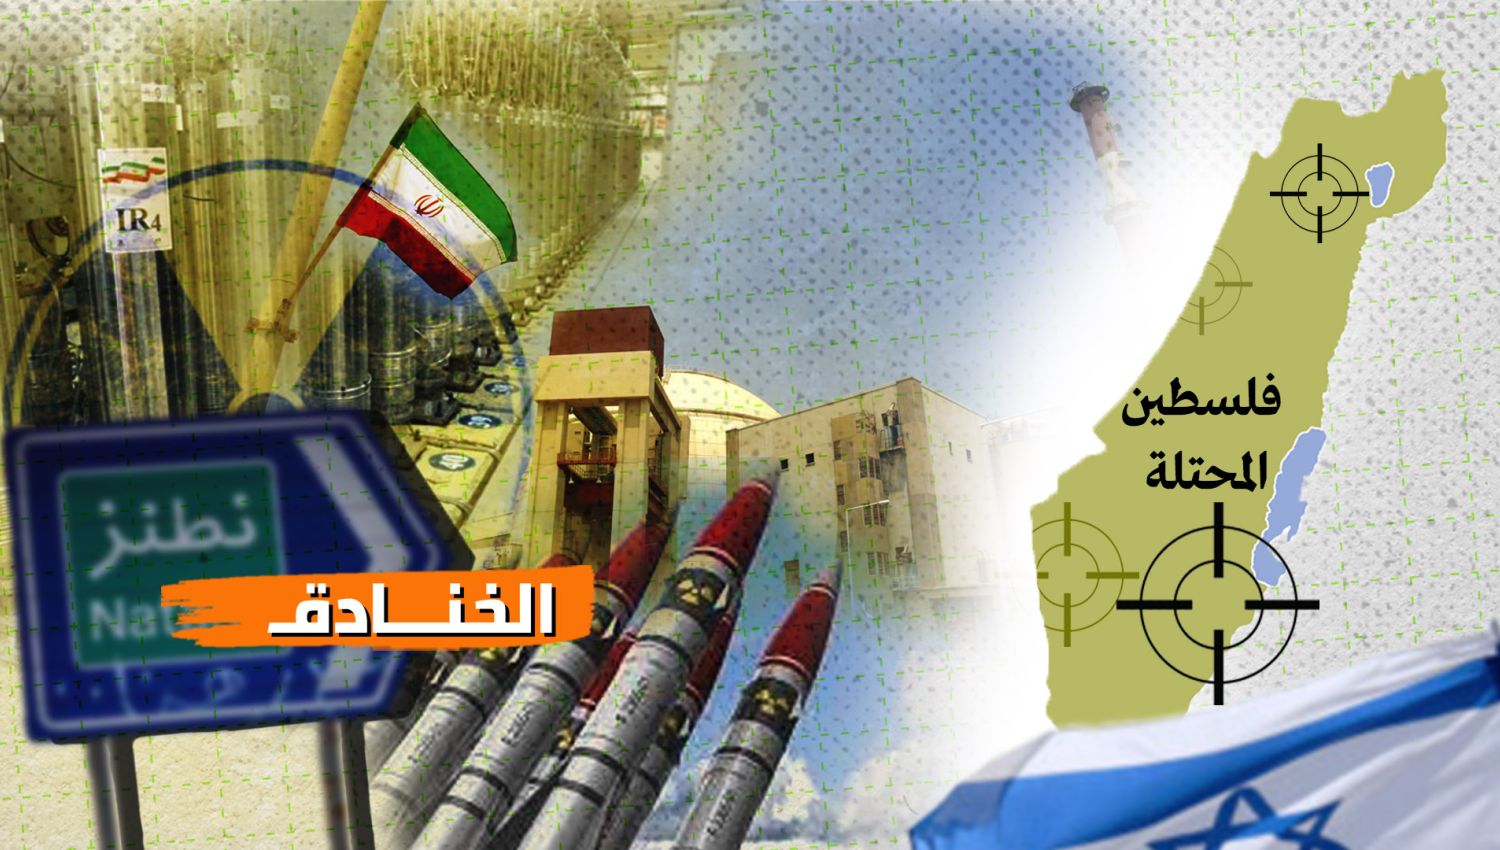 اسرائيل اليوم: إيران النووية تهديد وجودي لـ "اسرائيل"